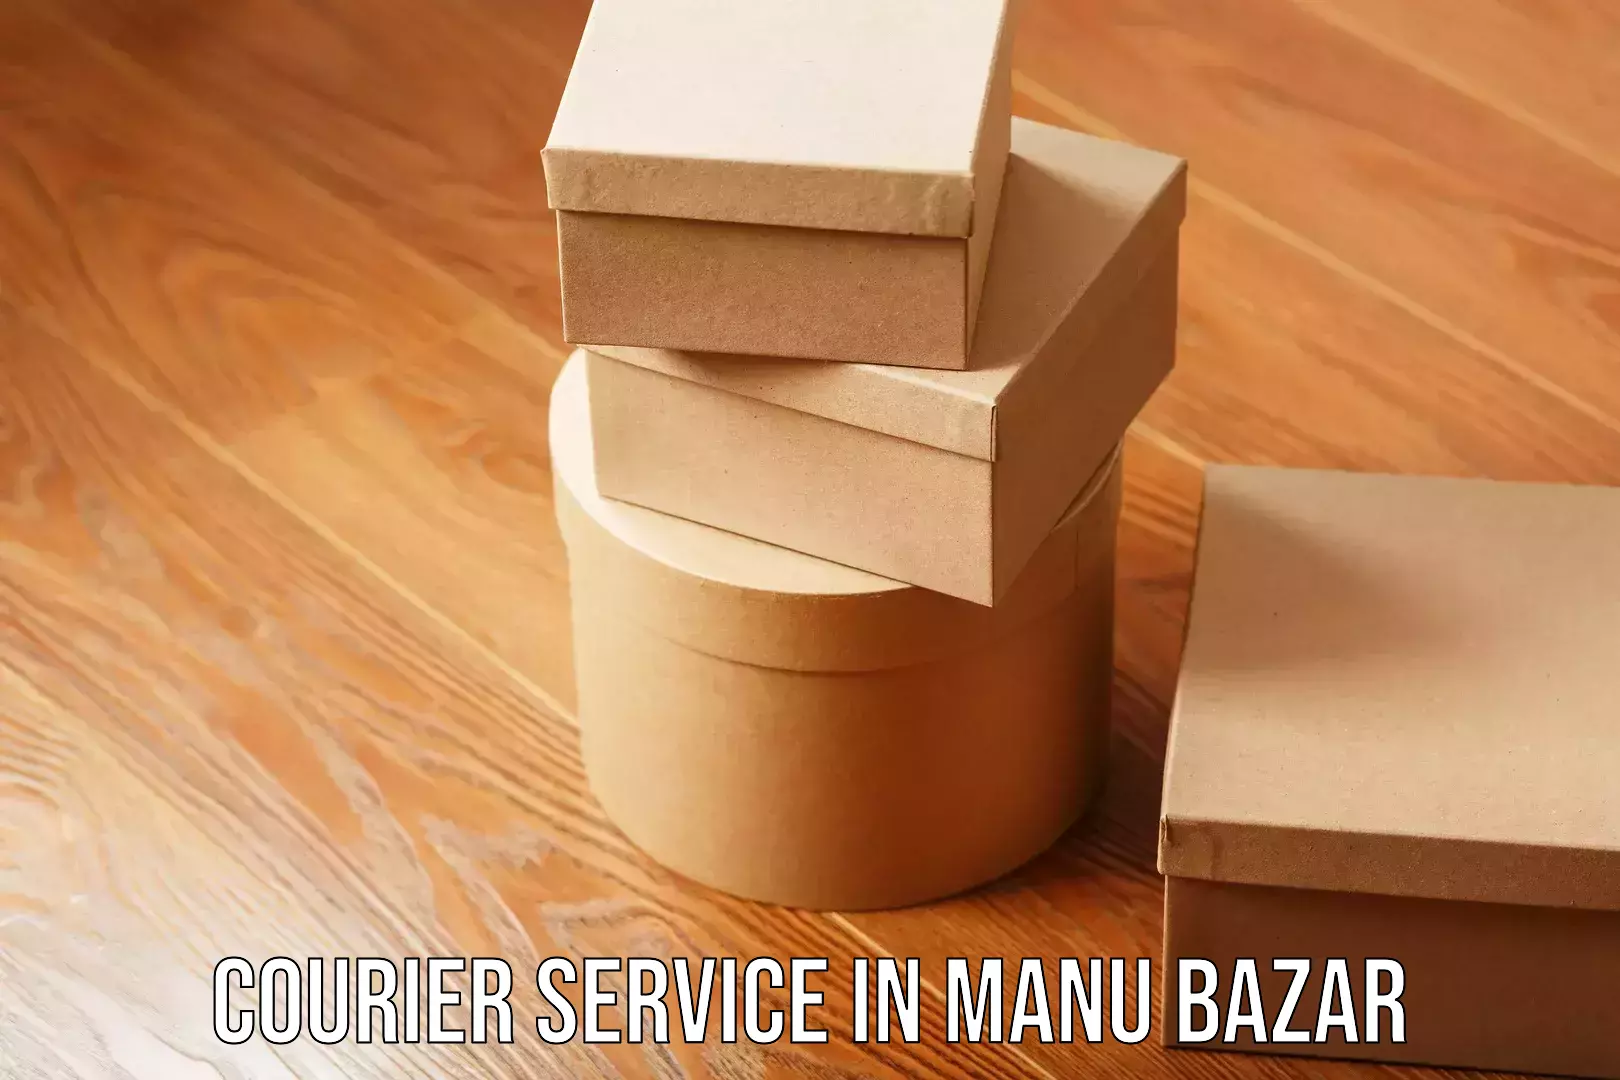 Multi-service courier options in Manu Bazar